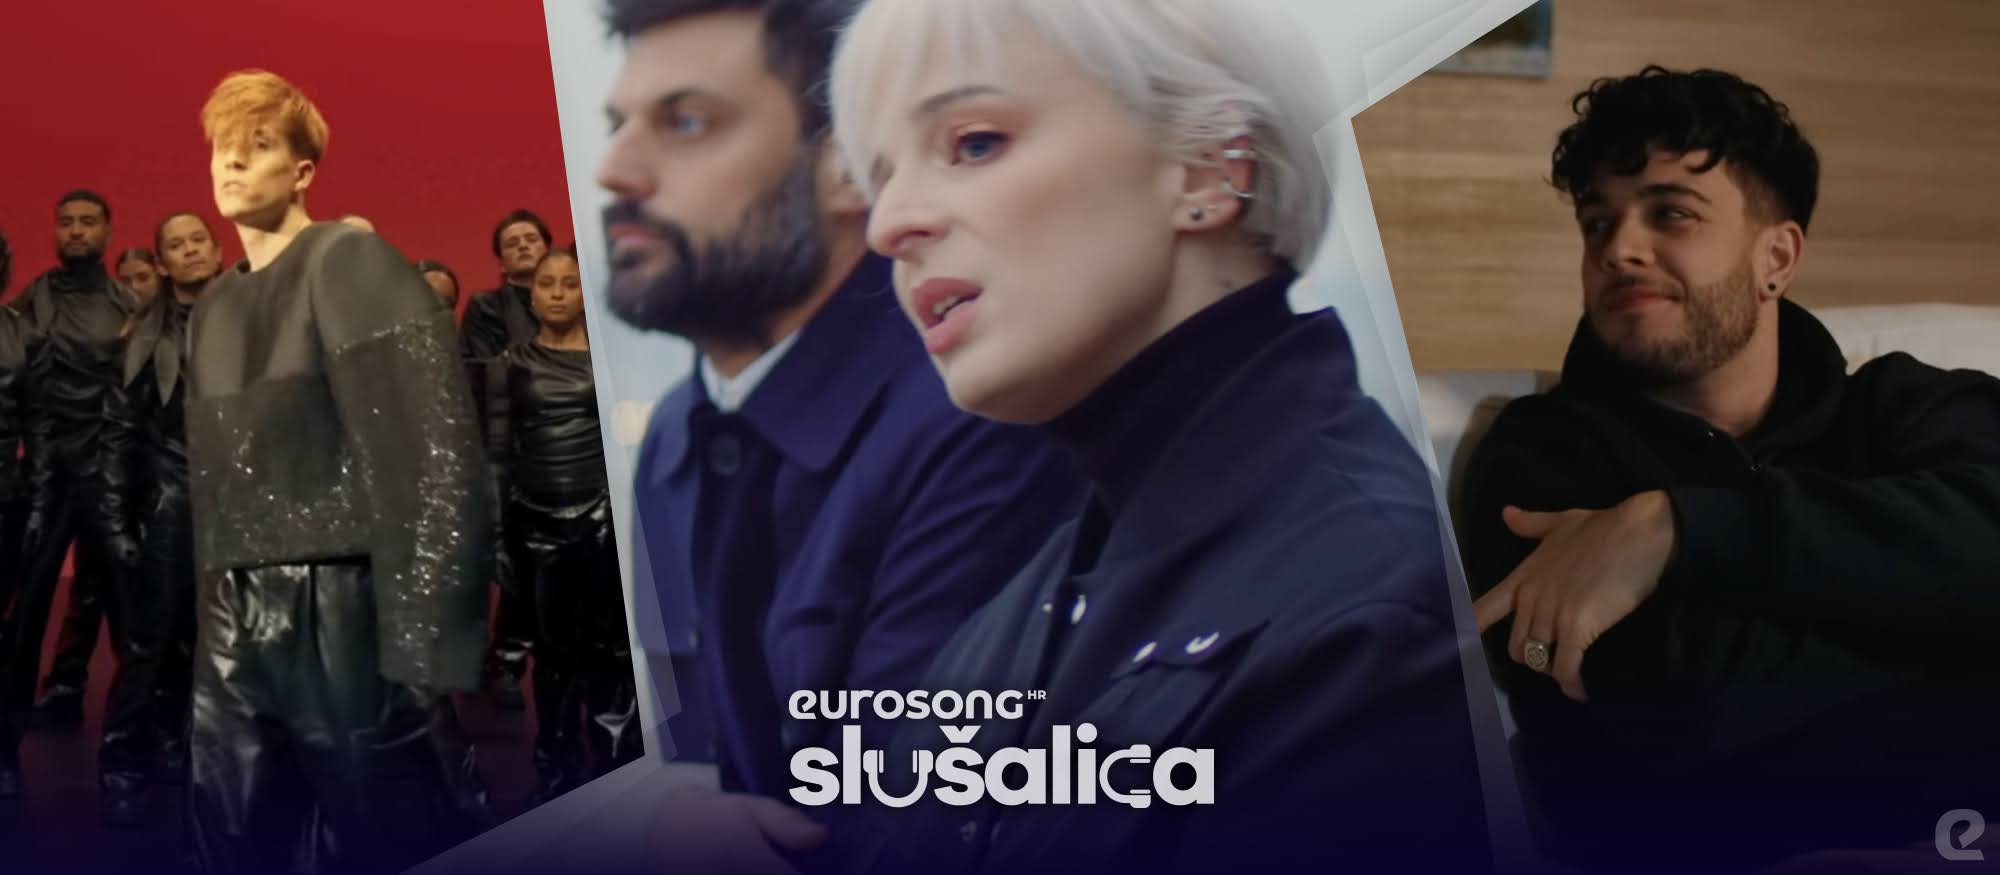 Eurosong Slušalica 2023 - strani hitovi veljače / februara - Loic Nottet, Madame Monsieur, Luca Hanni